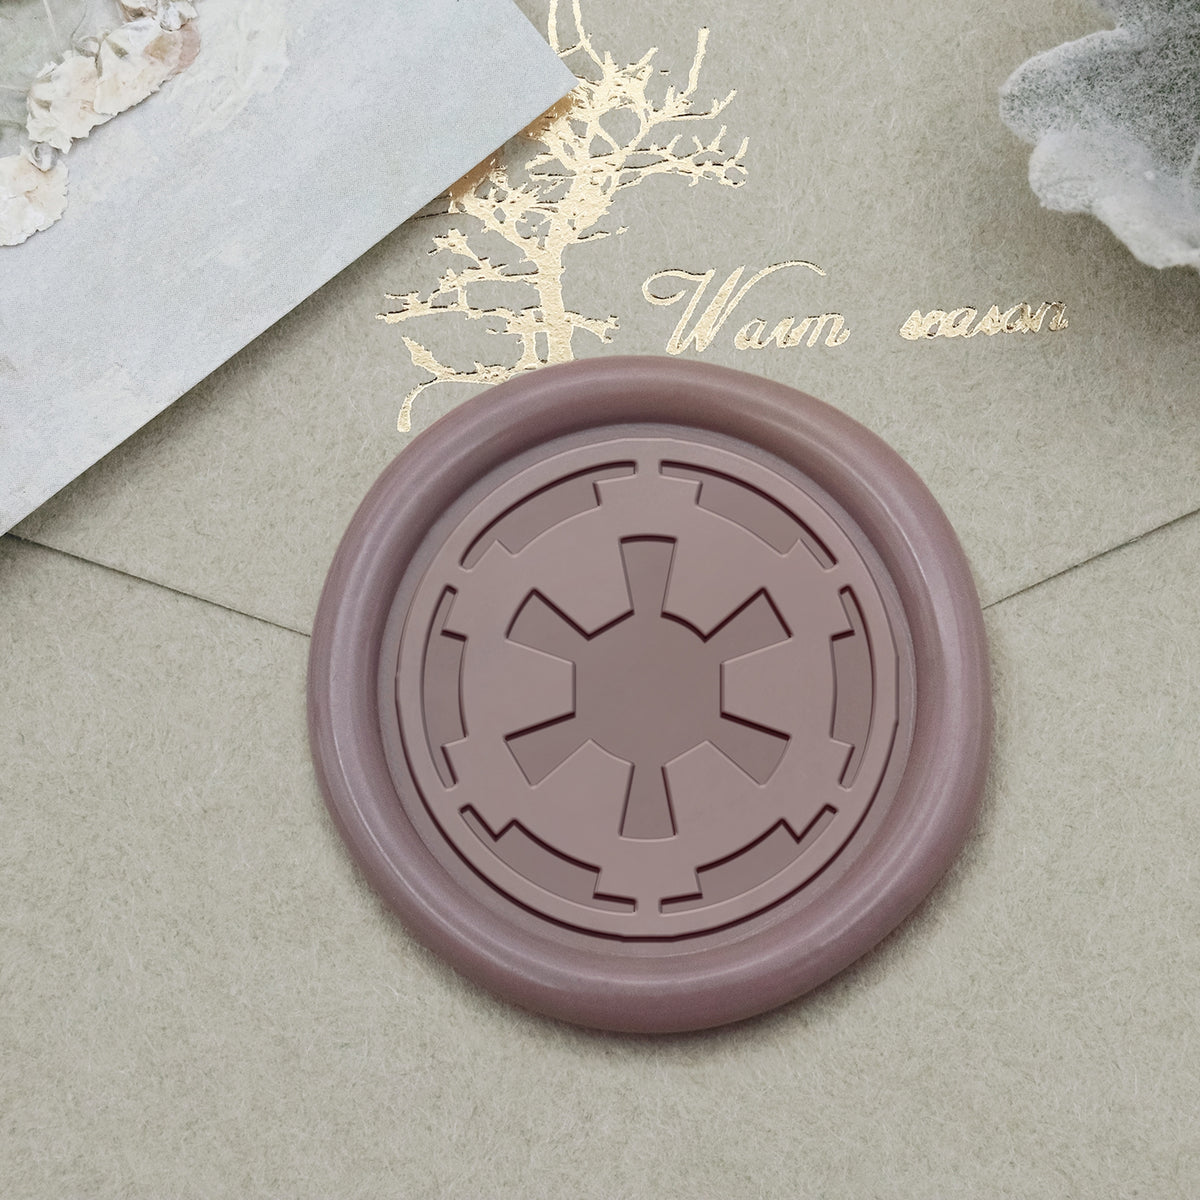 Stamprints Galactic Empire Design Wax Seal Stamp 1